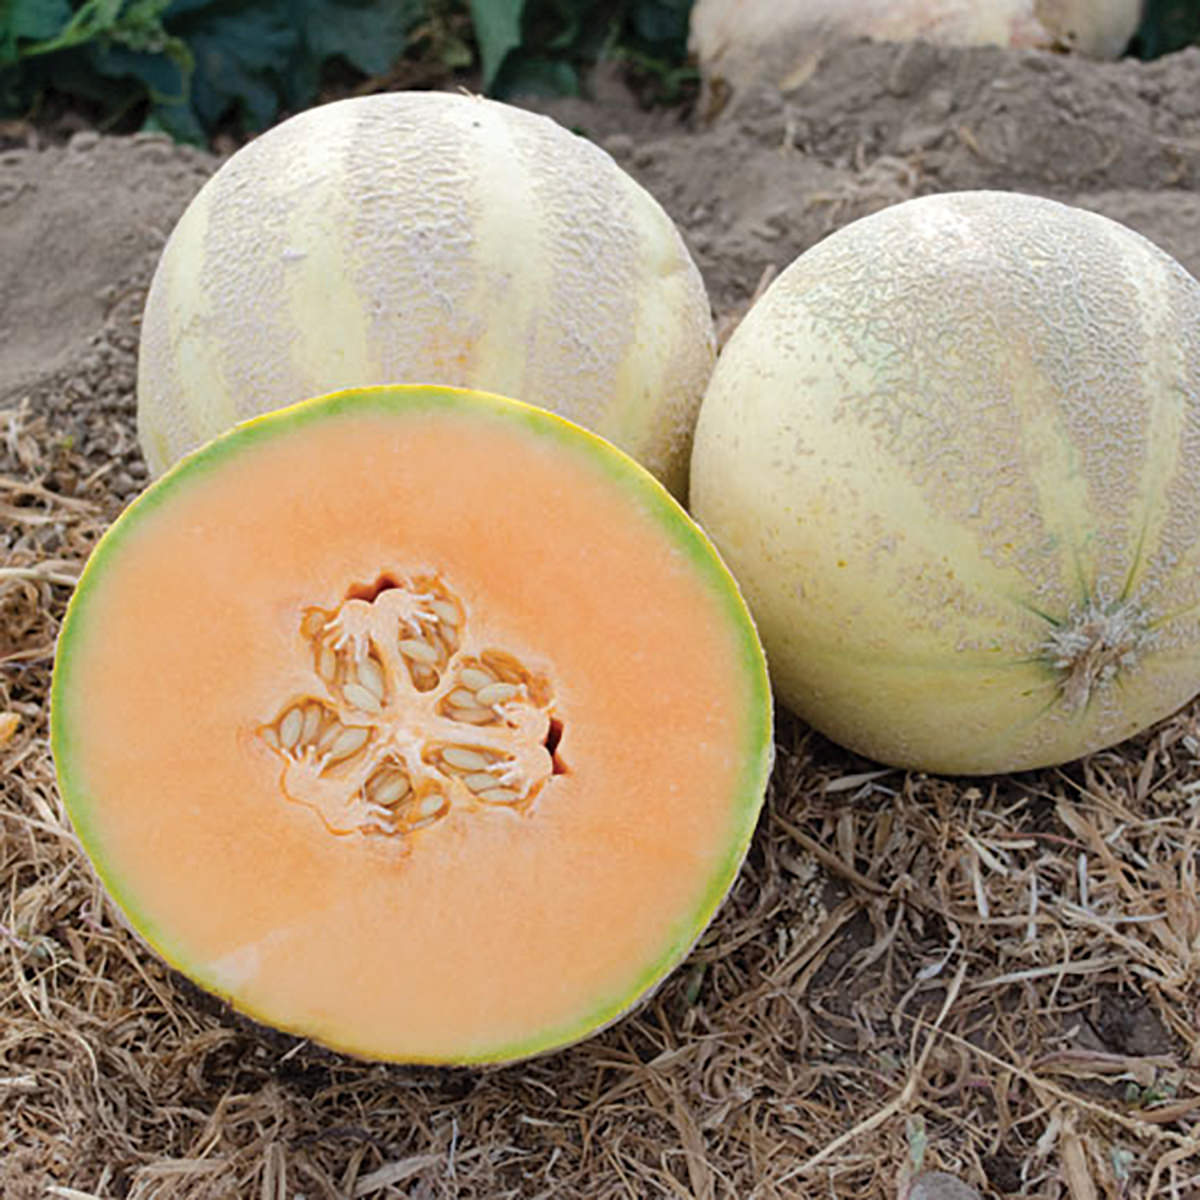 Oui F1 Hybrid French Charentais Style Melon Seeds